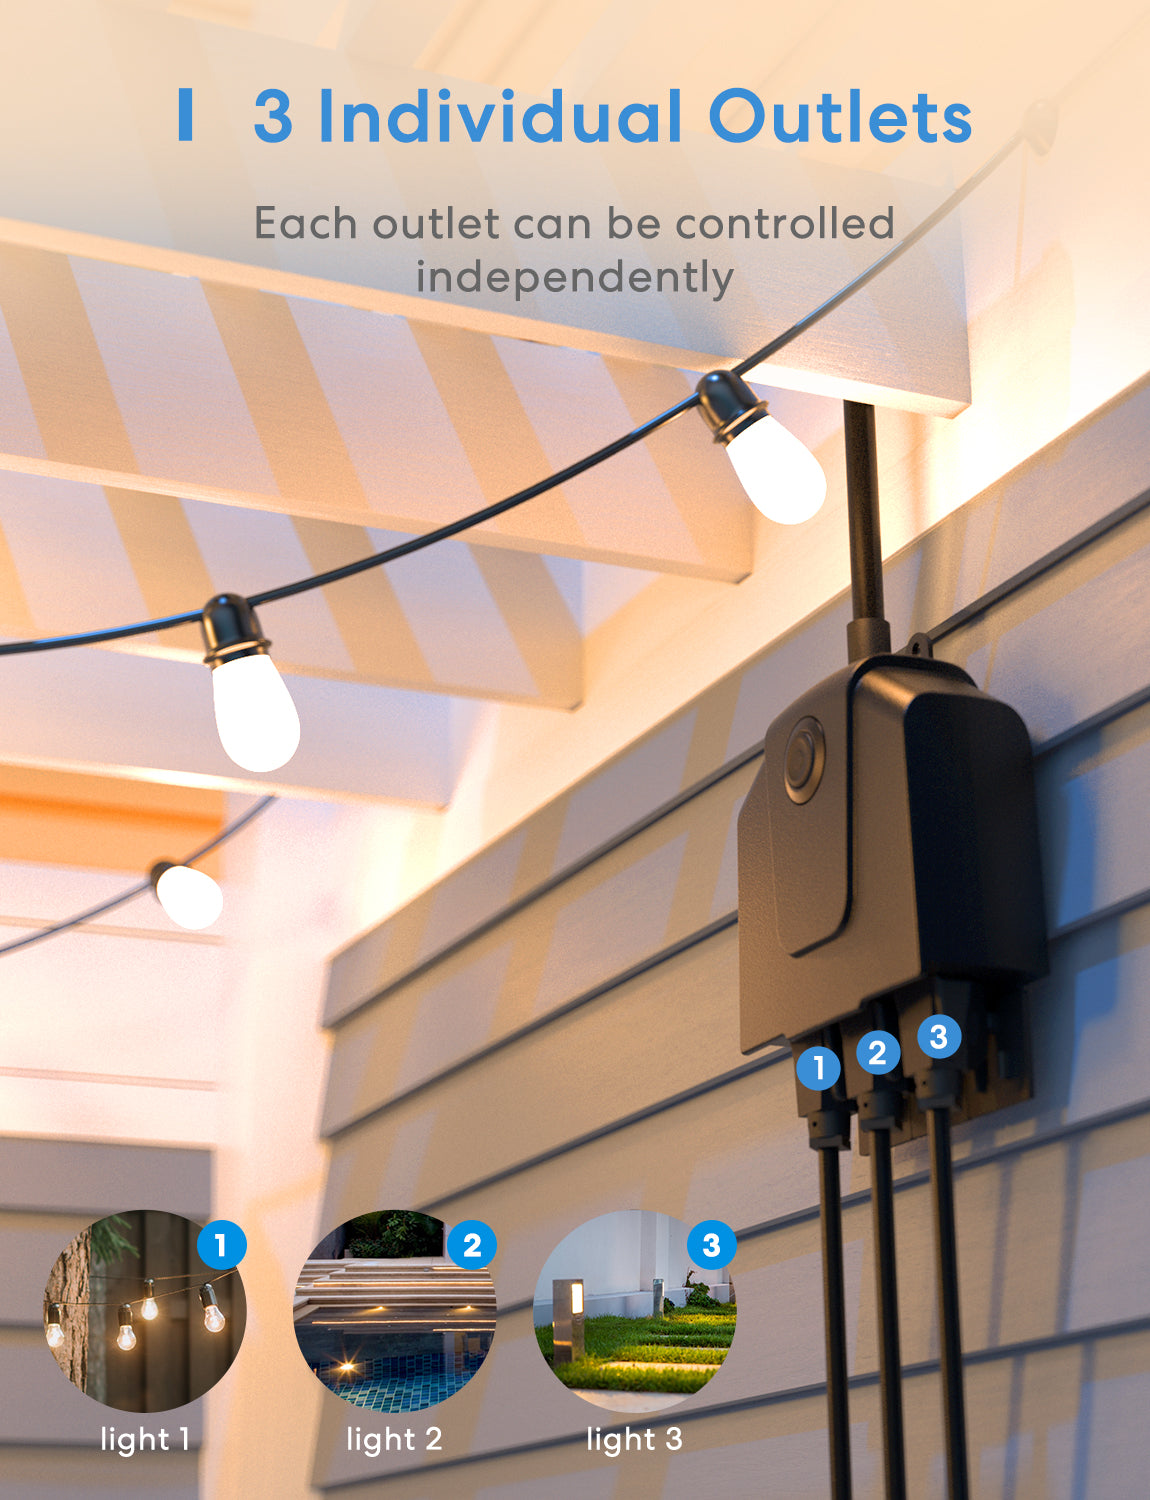 Outdoor Smart Plug, WiFi Plug Waterproof Socket